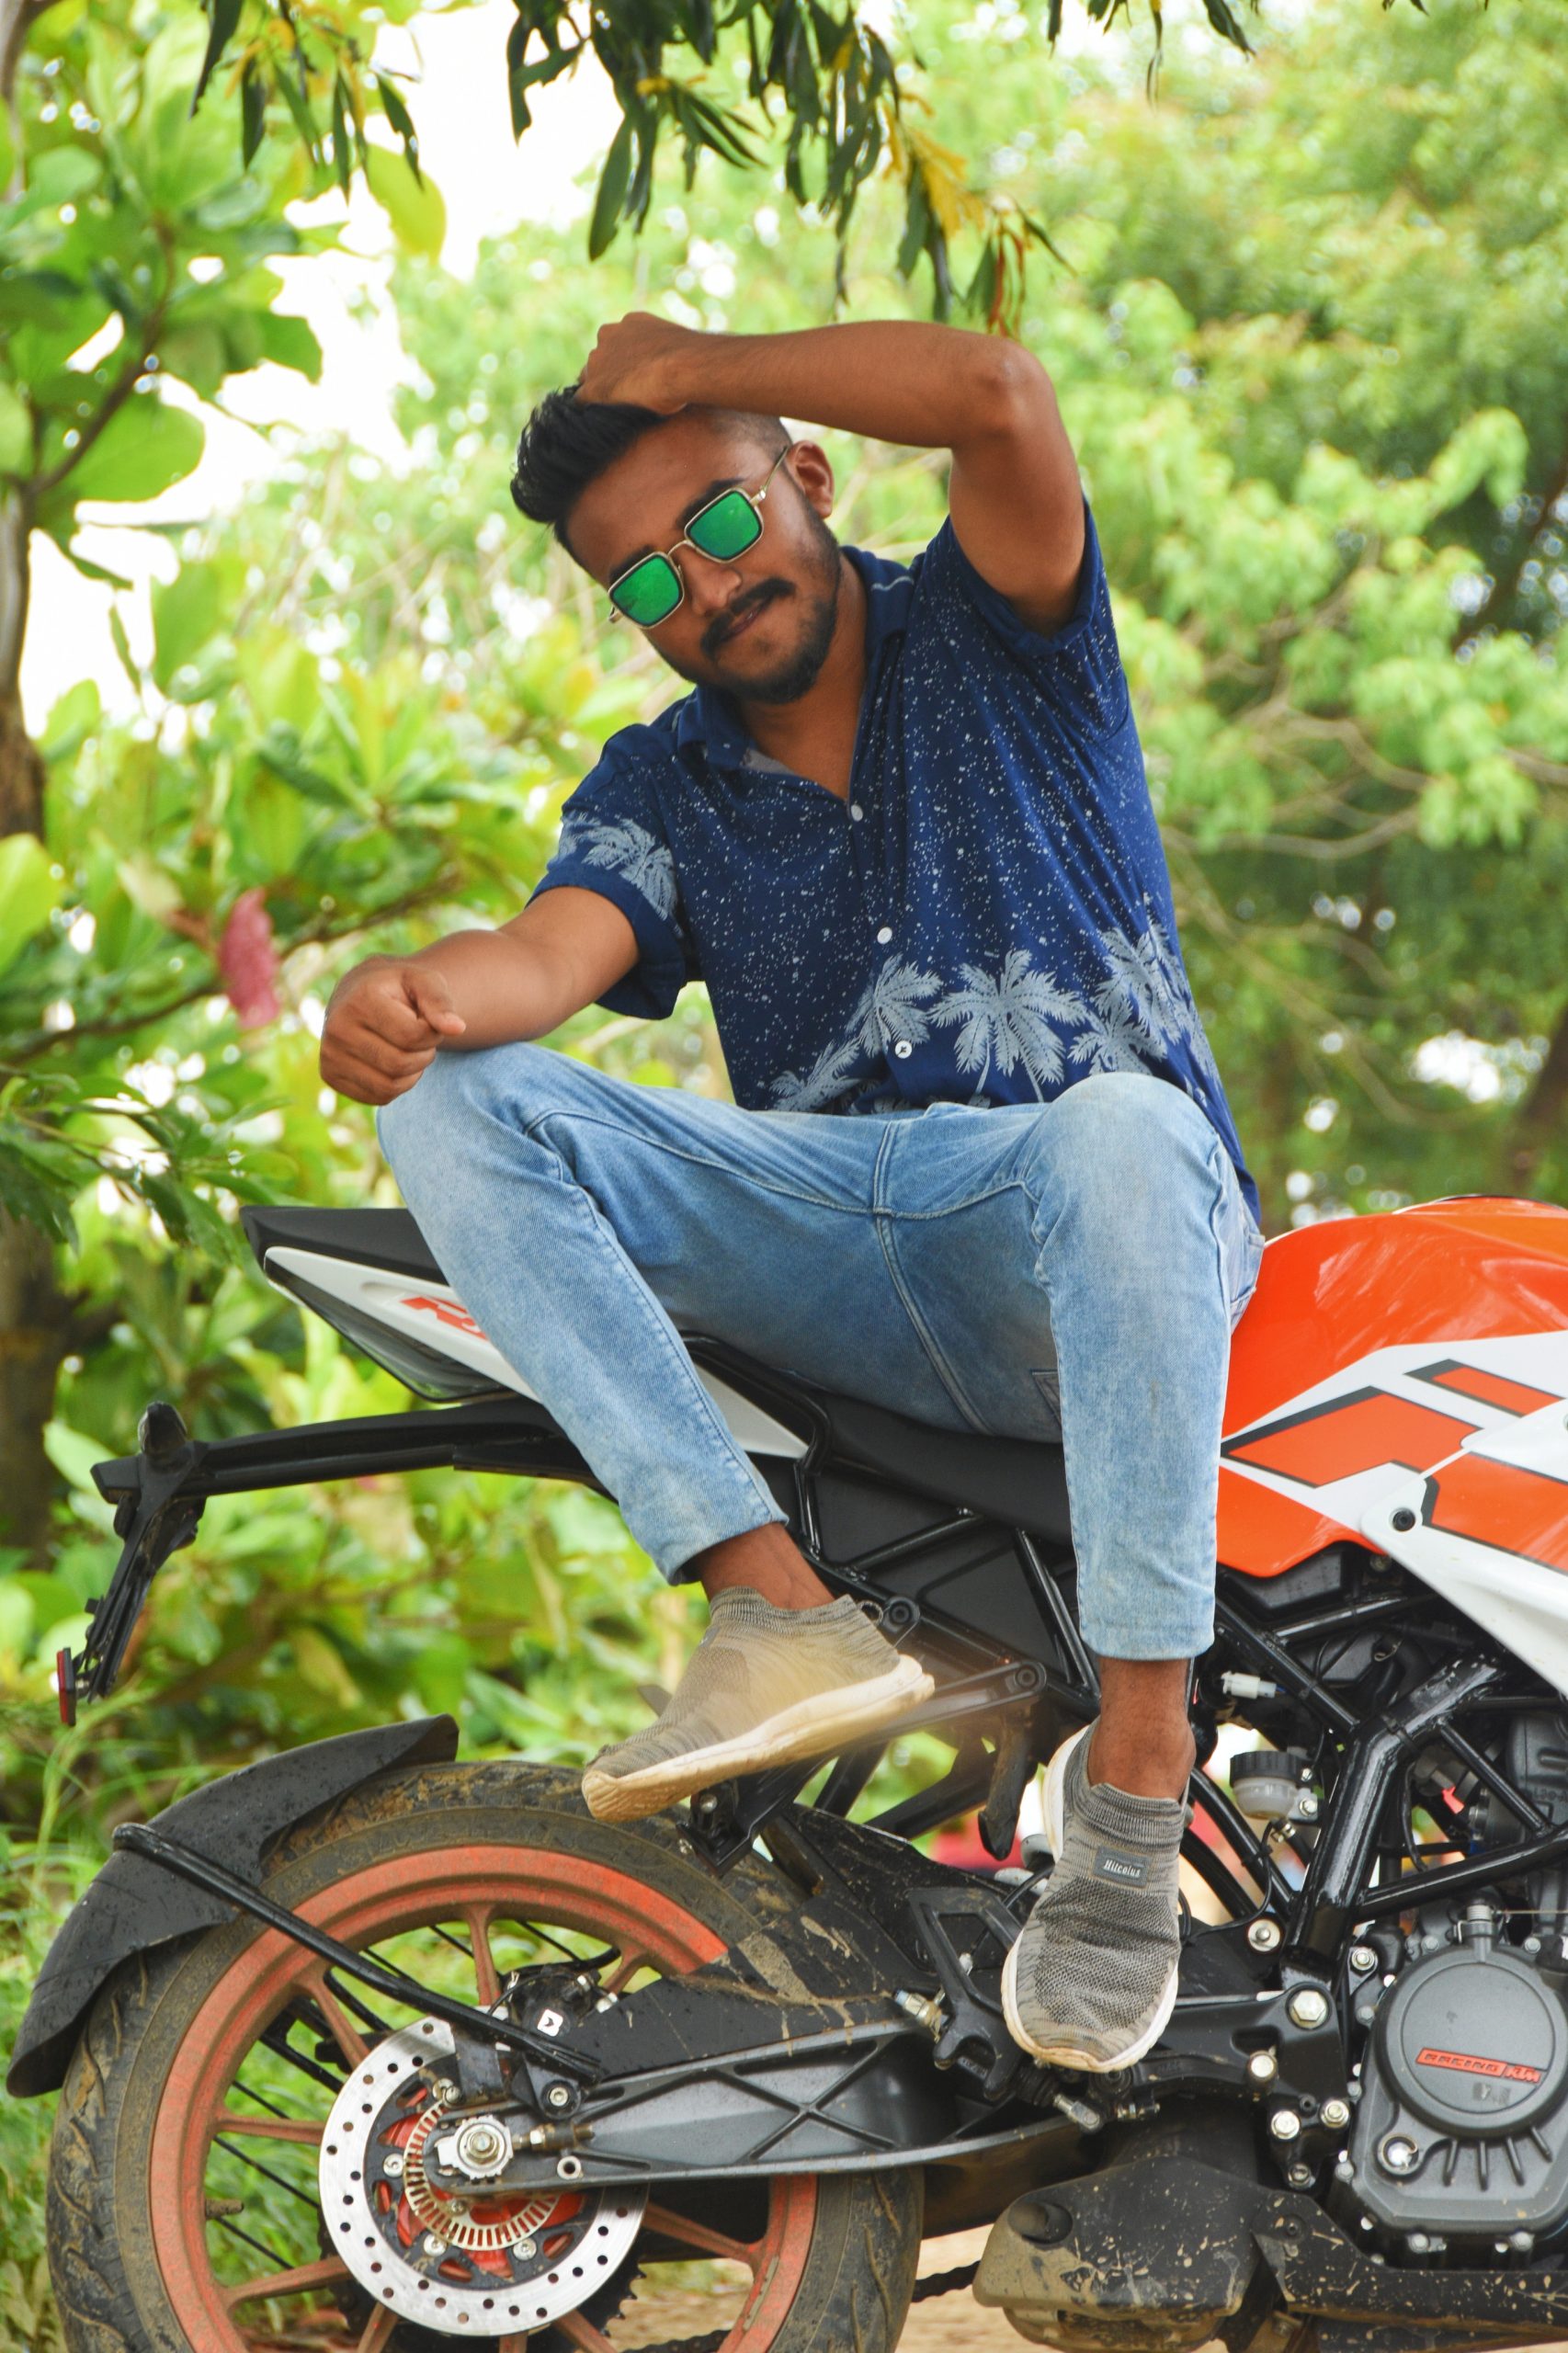 How to photoshoot bike poses | motorcycle photography poses - YouTube